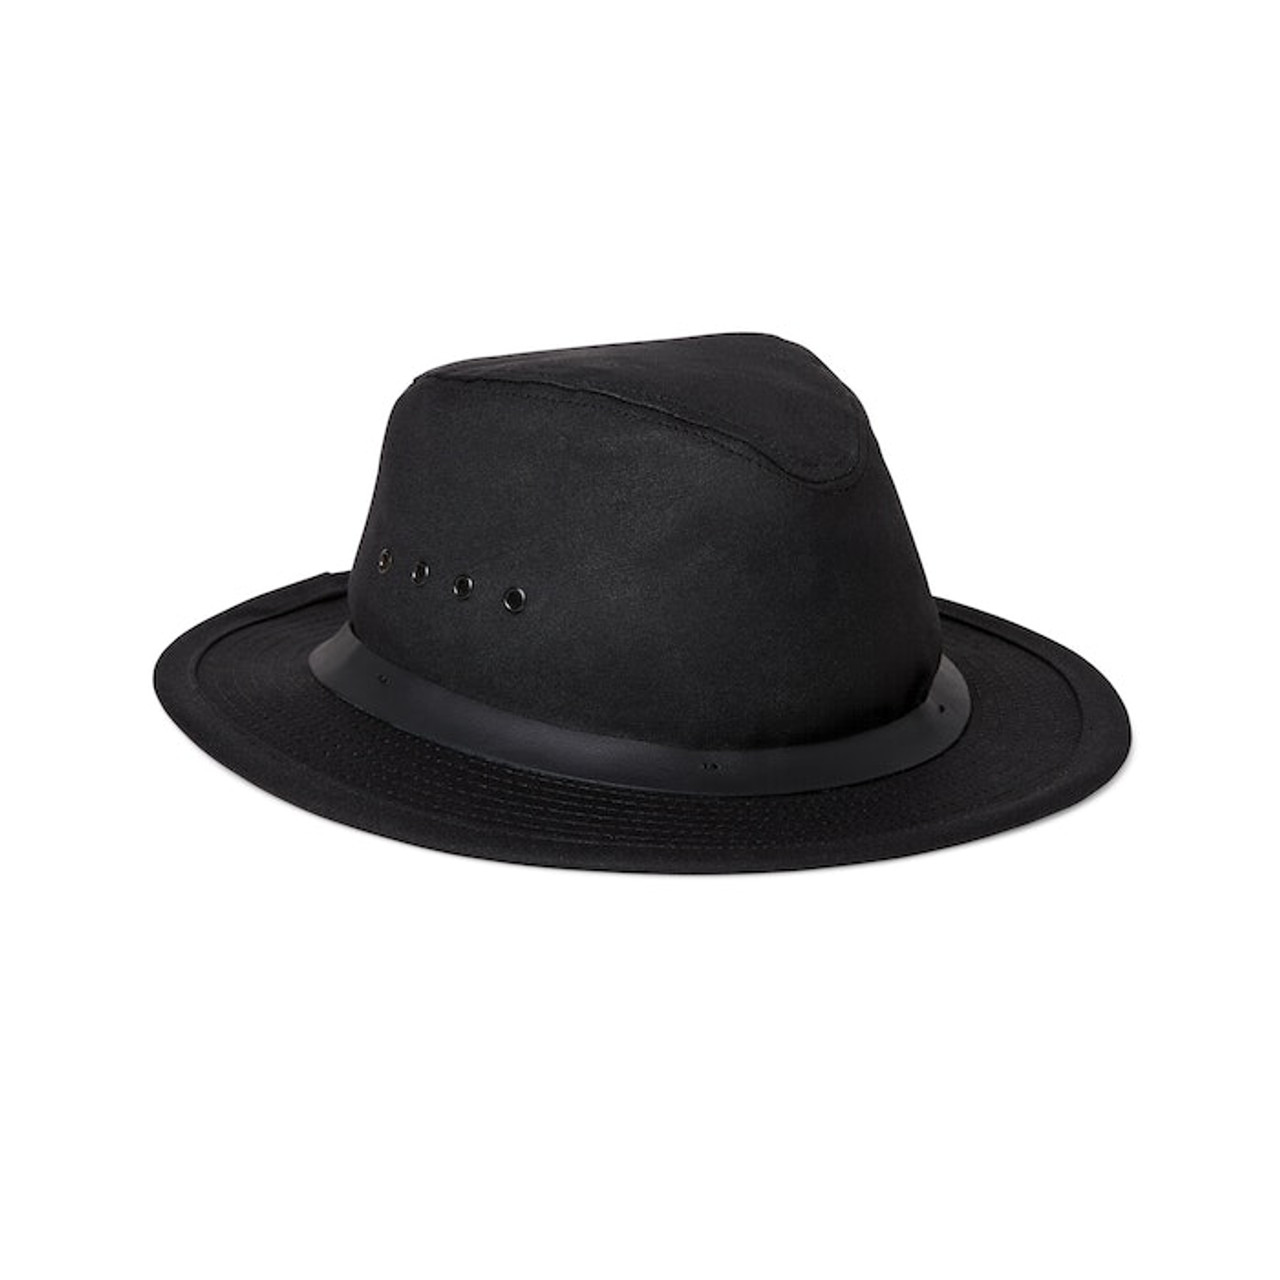 Filson Tin Cloth Packer Hat